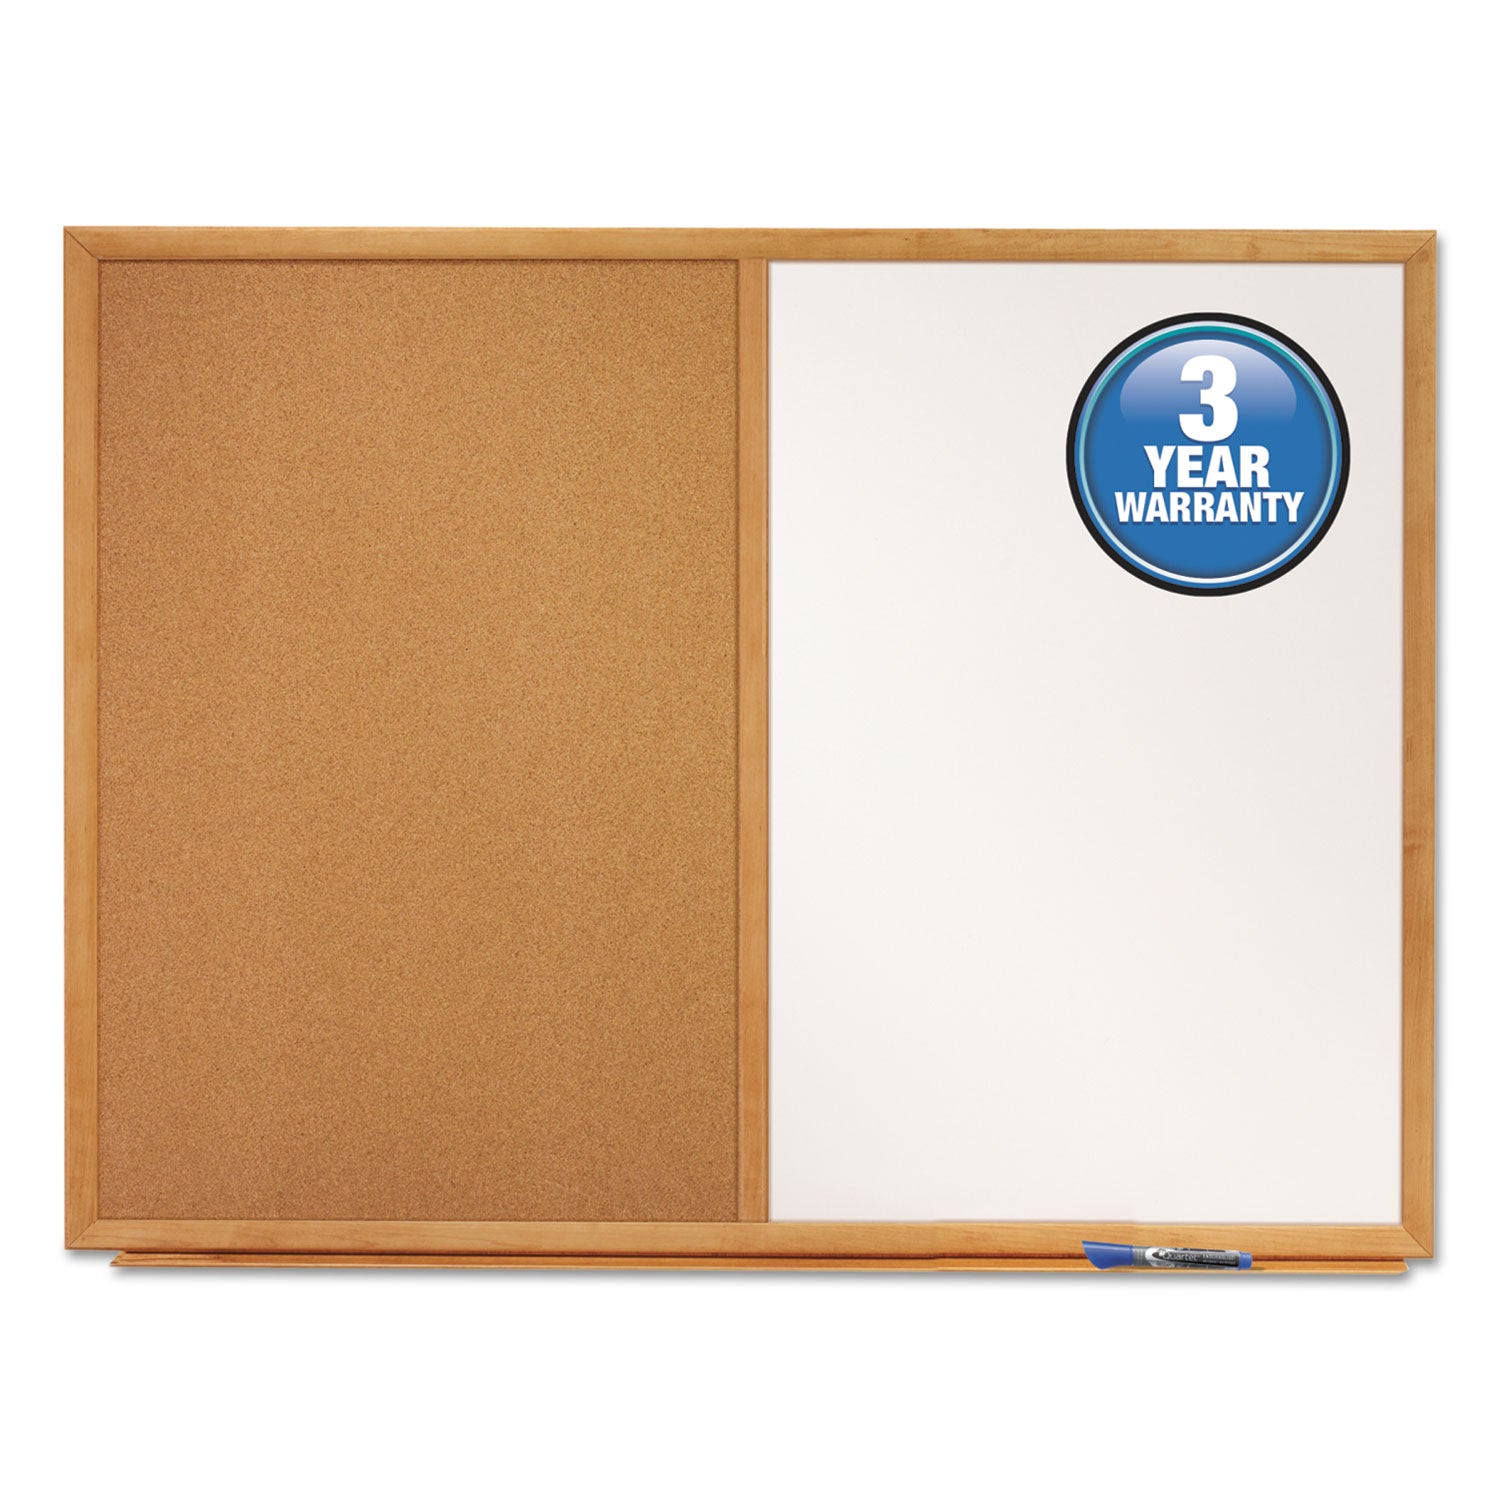 Bulletin/Dry-Erase Board, Melamine/Cork, 36 x 24, Brown/White Surface, Oak Finish Frame - 